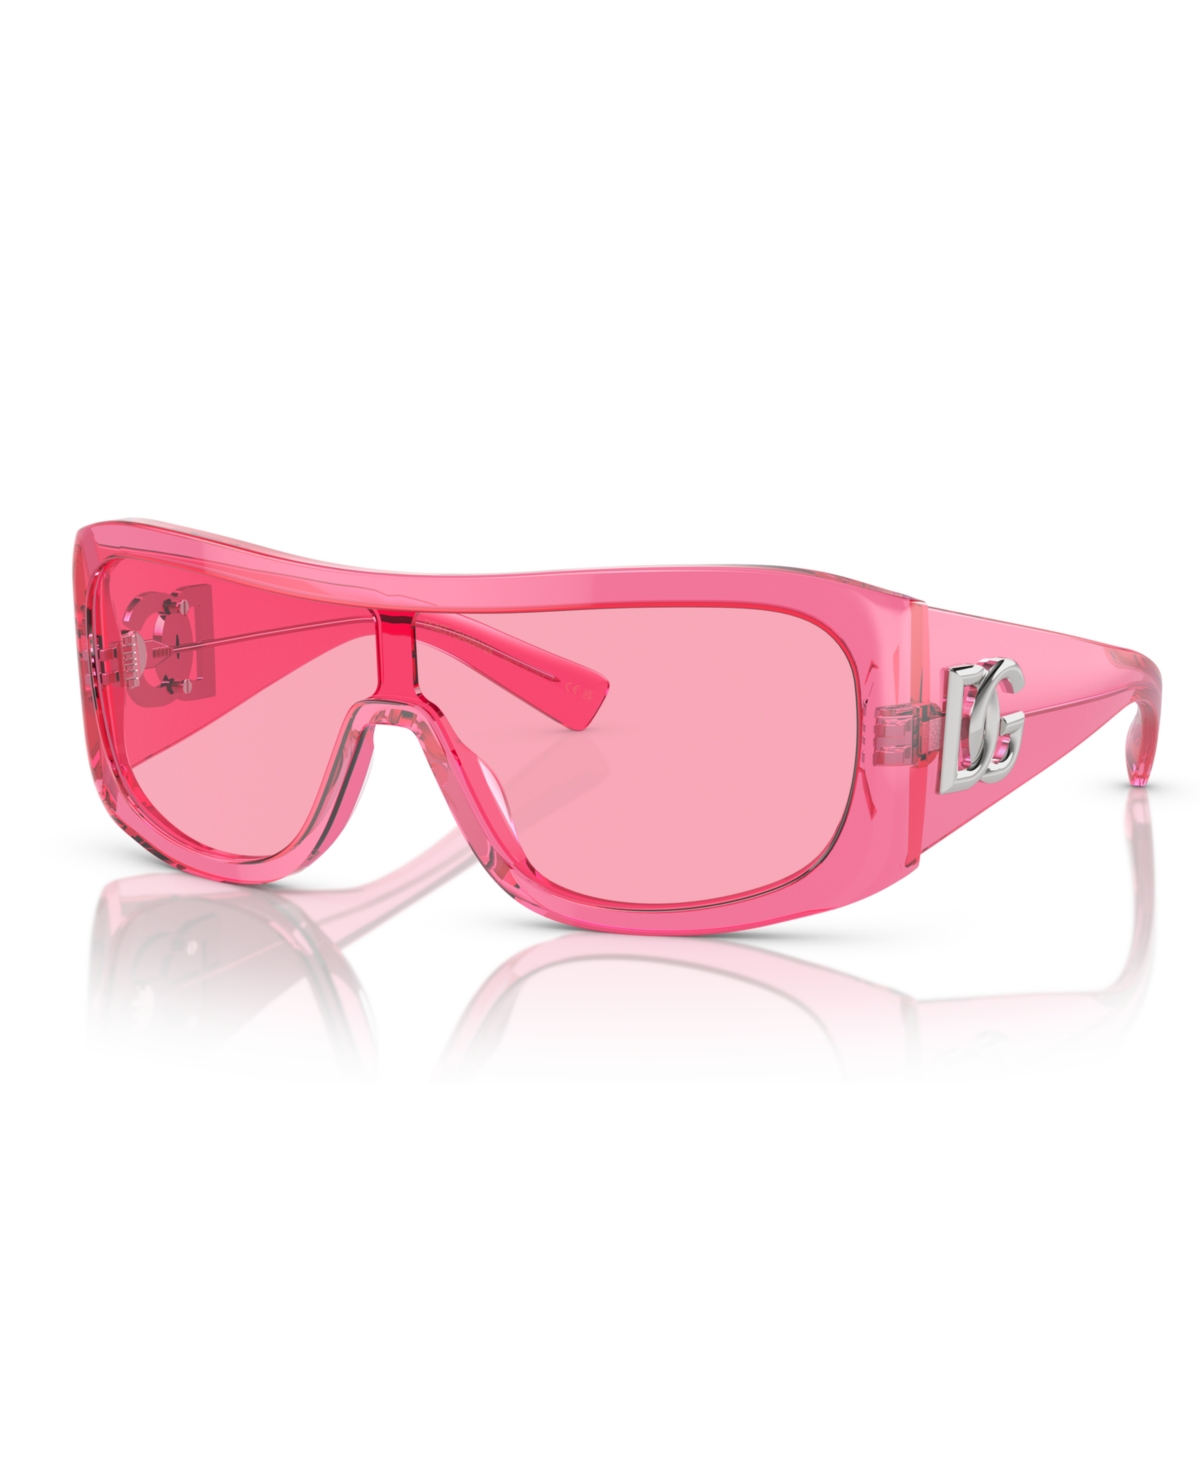 Dolce&Gabbana Men's Sunglasses DG4454 - Pink Transparent